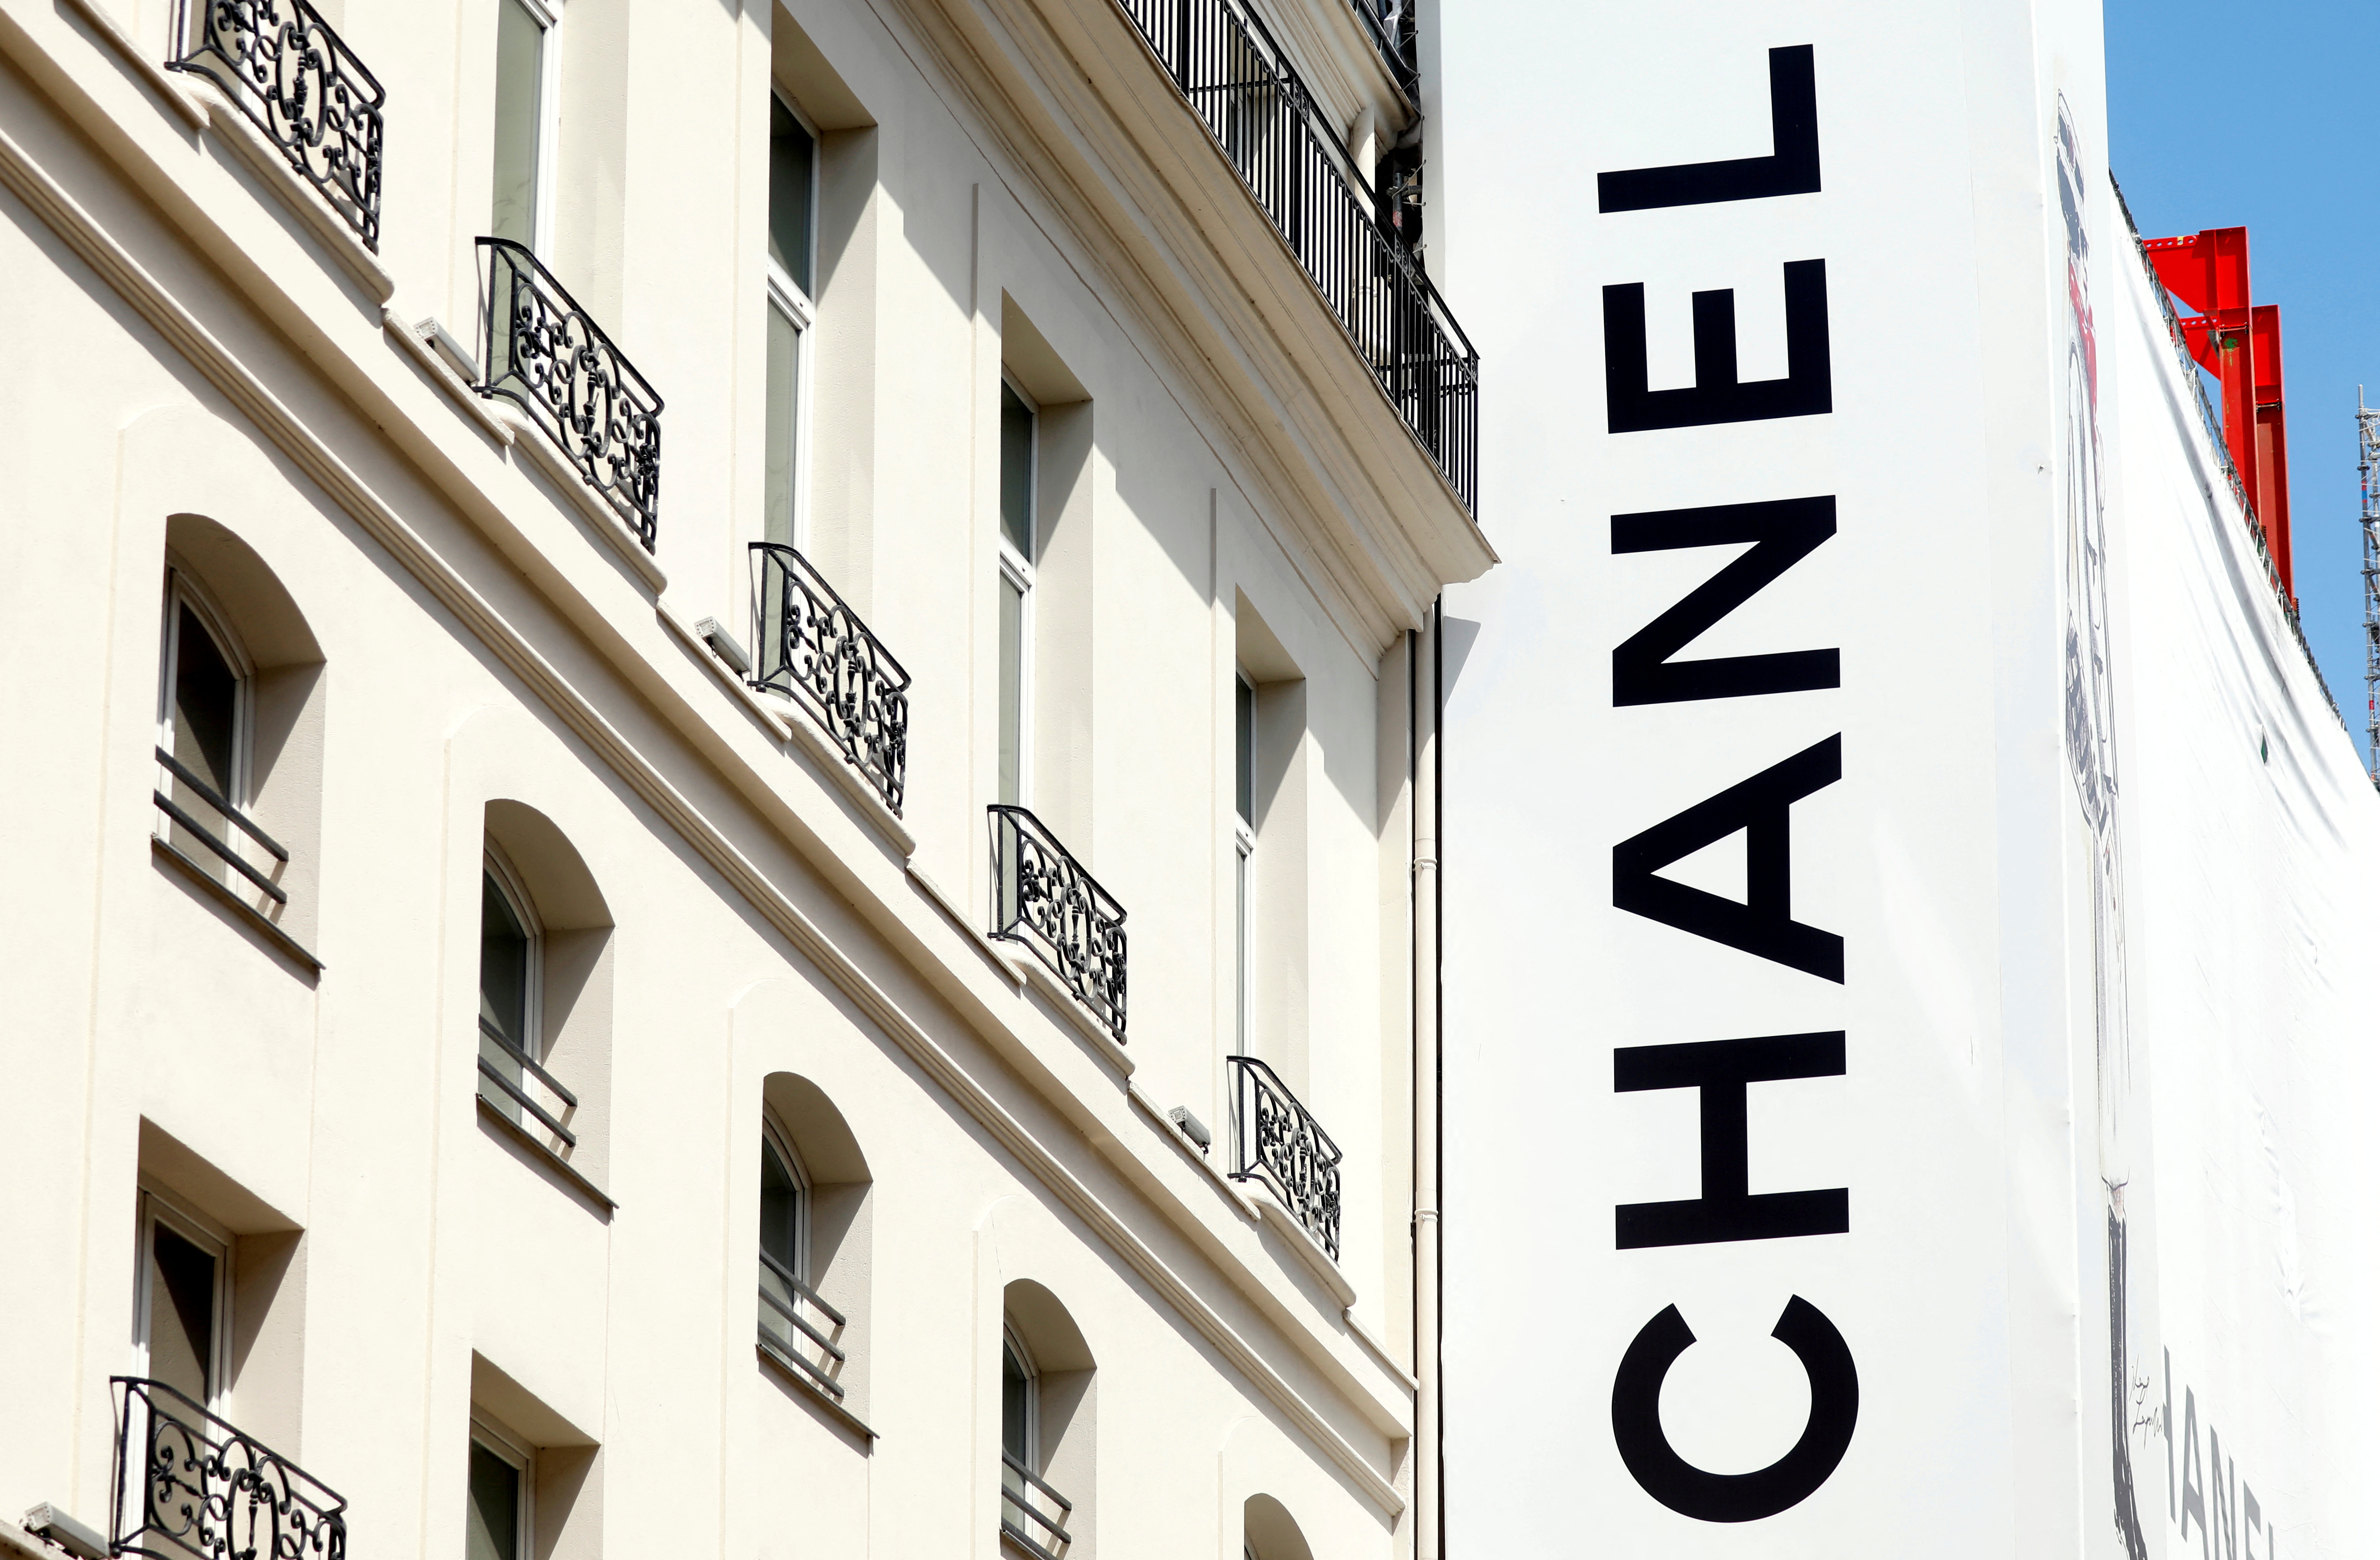 Breaking News: Chanel Price Increase 2023 - PurseBop